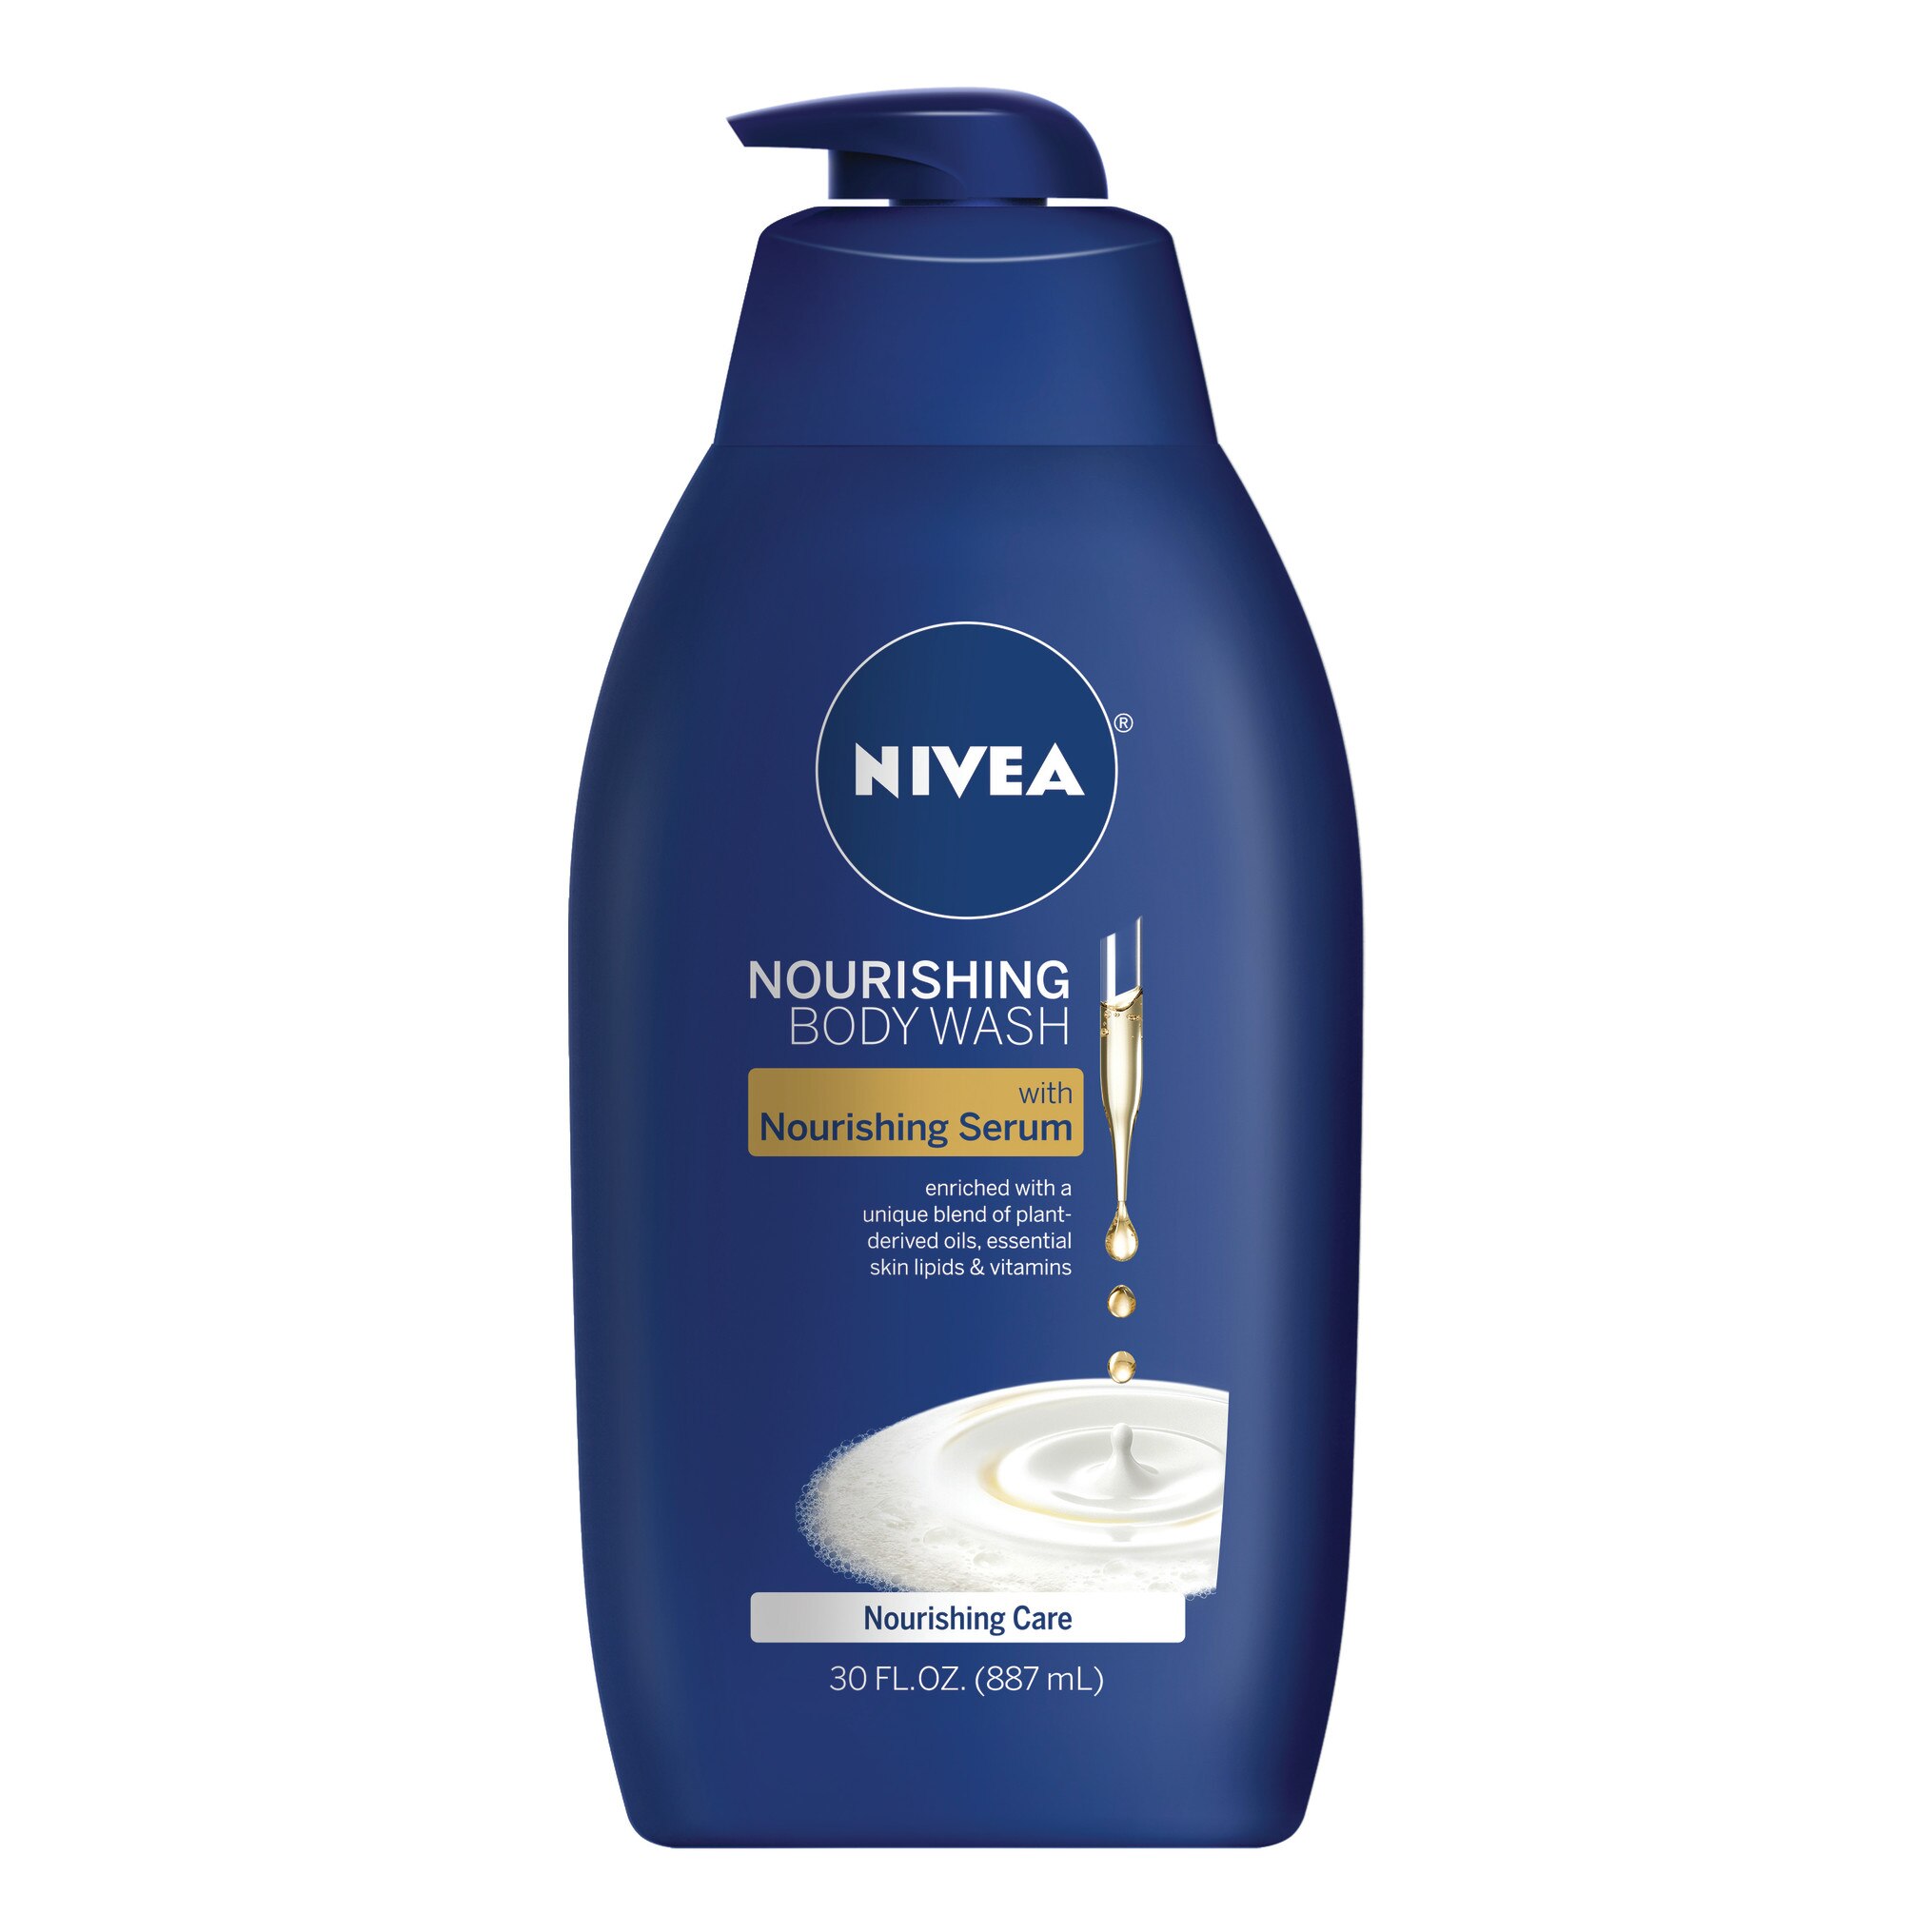 NIVEA Nourishing Care Body Wash with Pump, 30 OZ